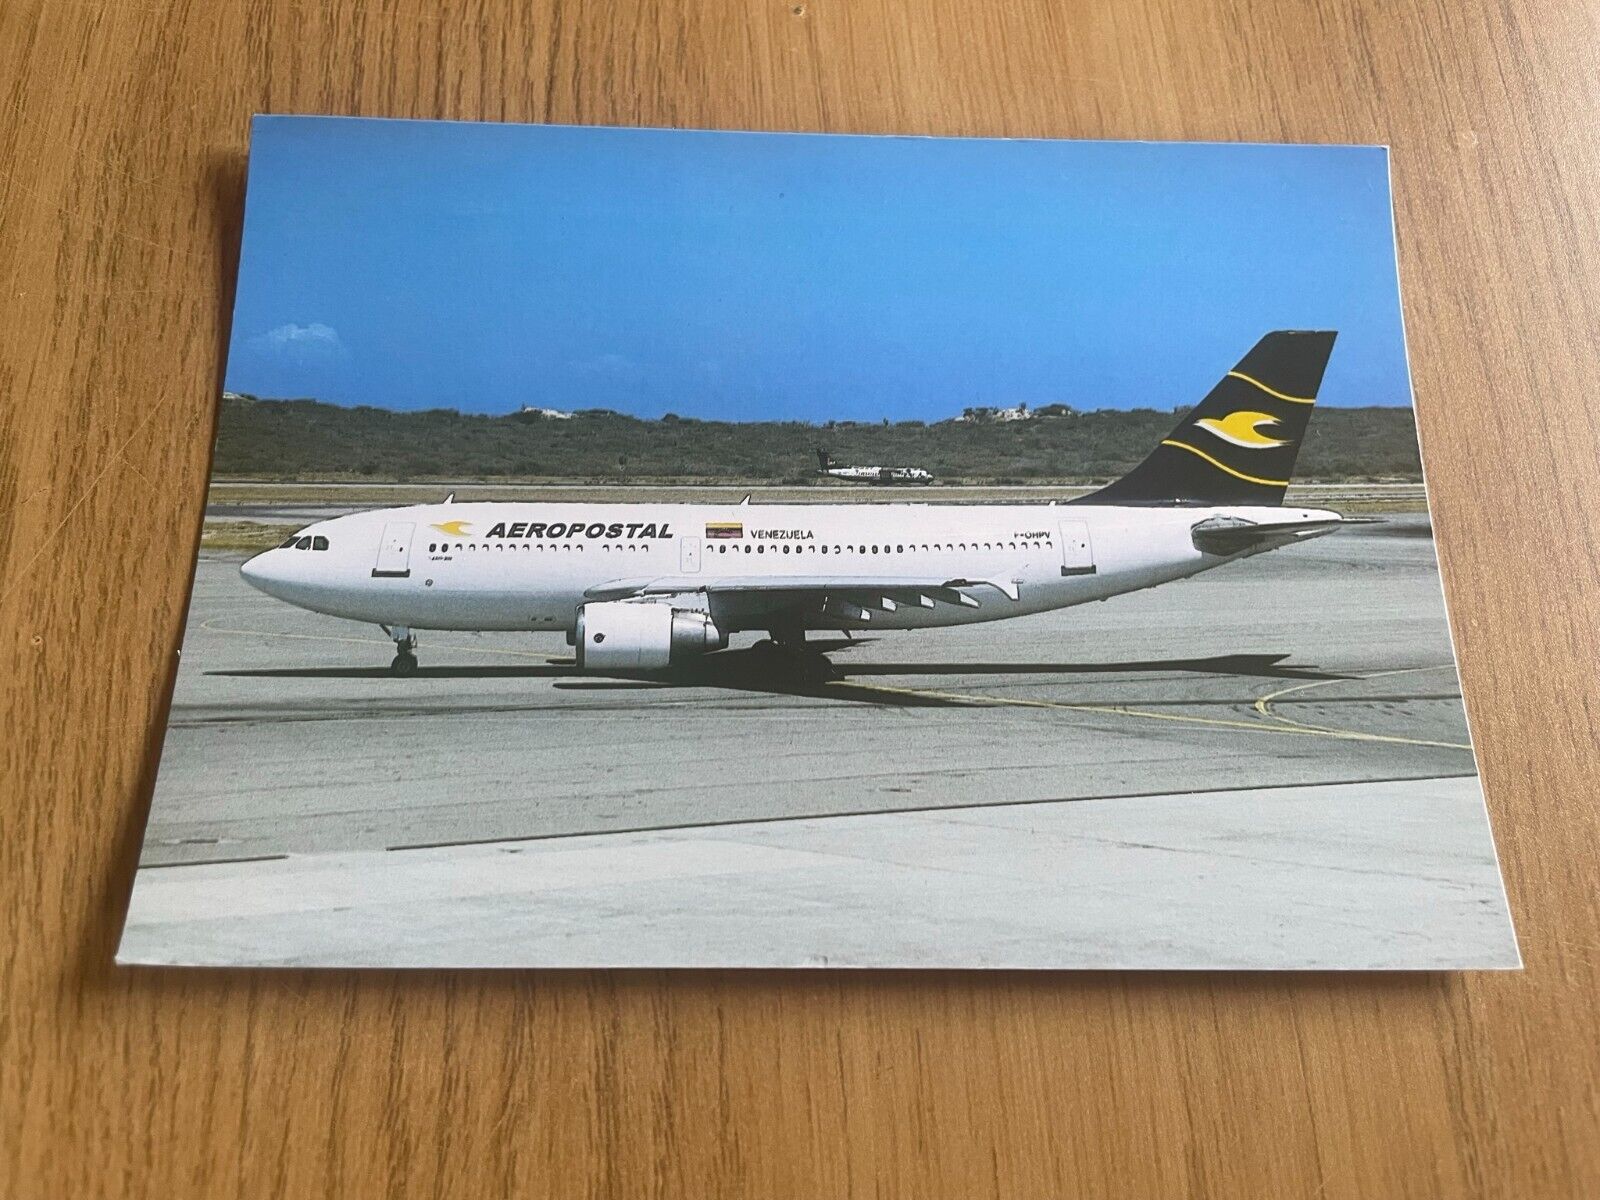 Aeropostal Airbus A310 aircraft postcard